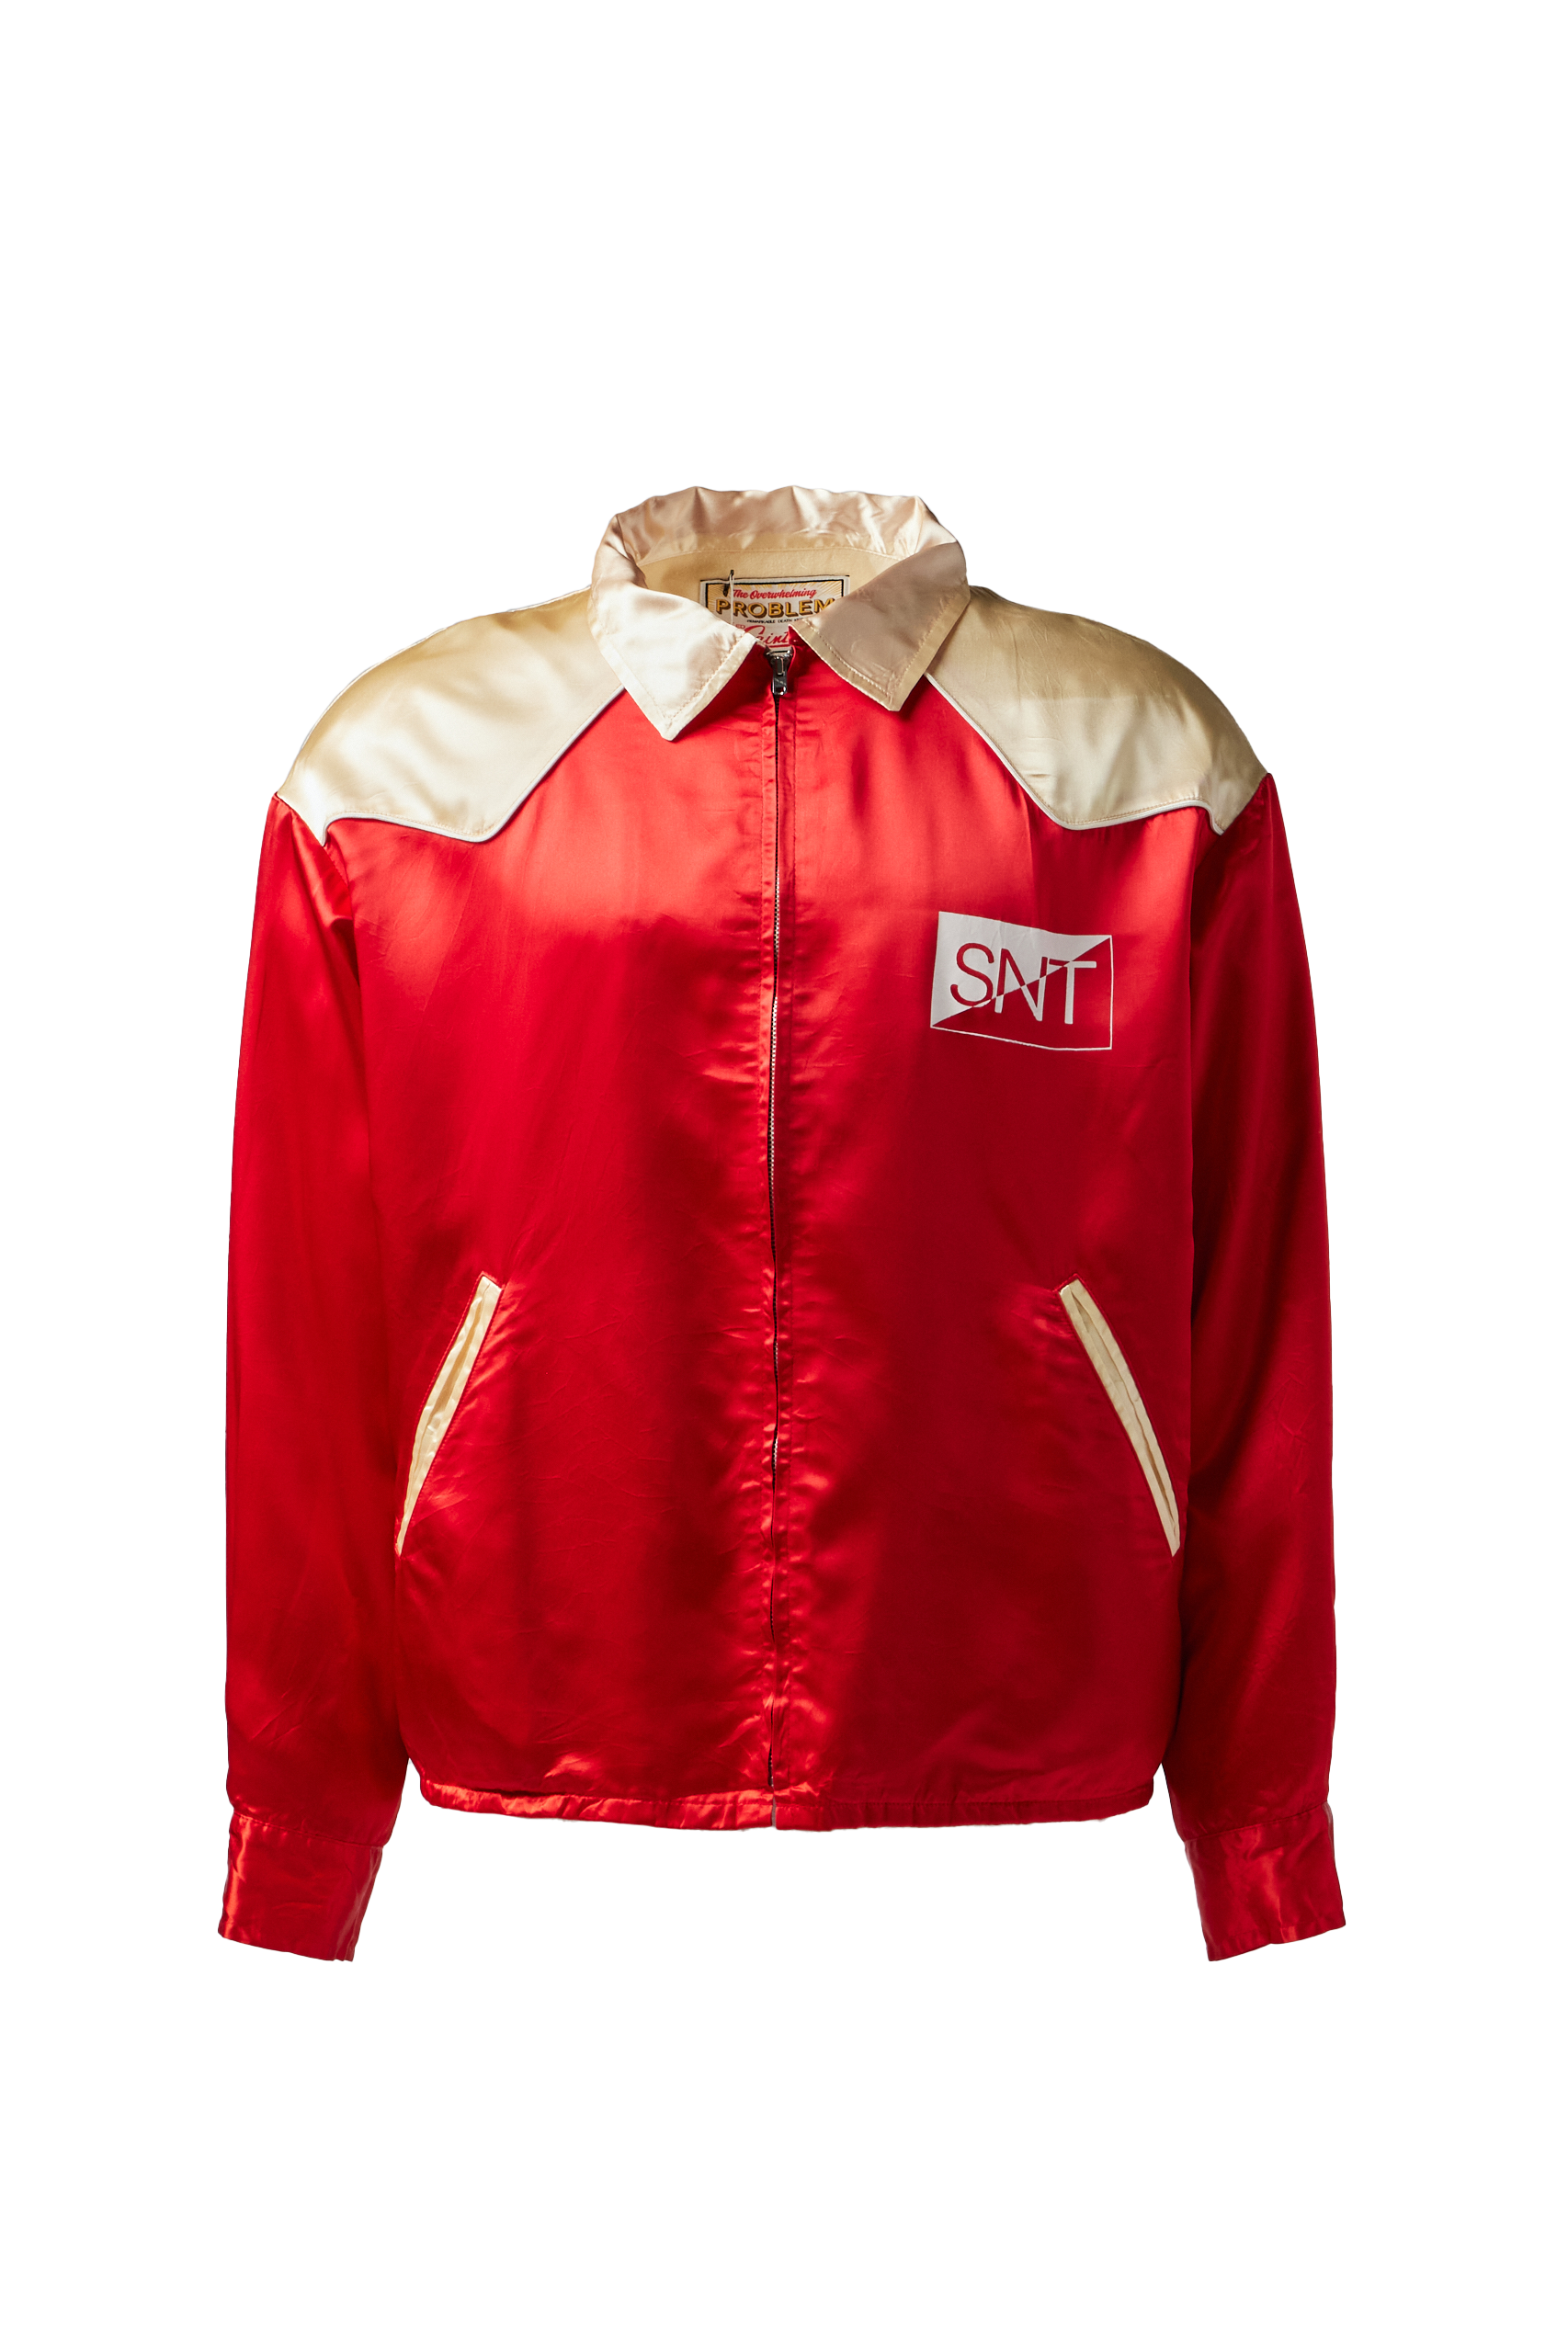 SAINT Mxxxxxx - Western Shirt Jacket product image